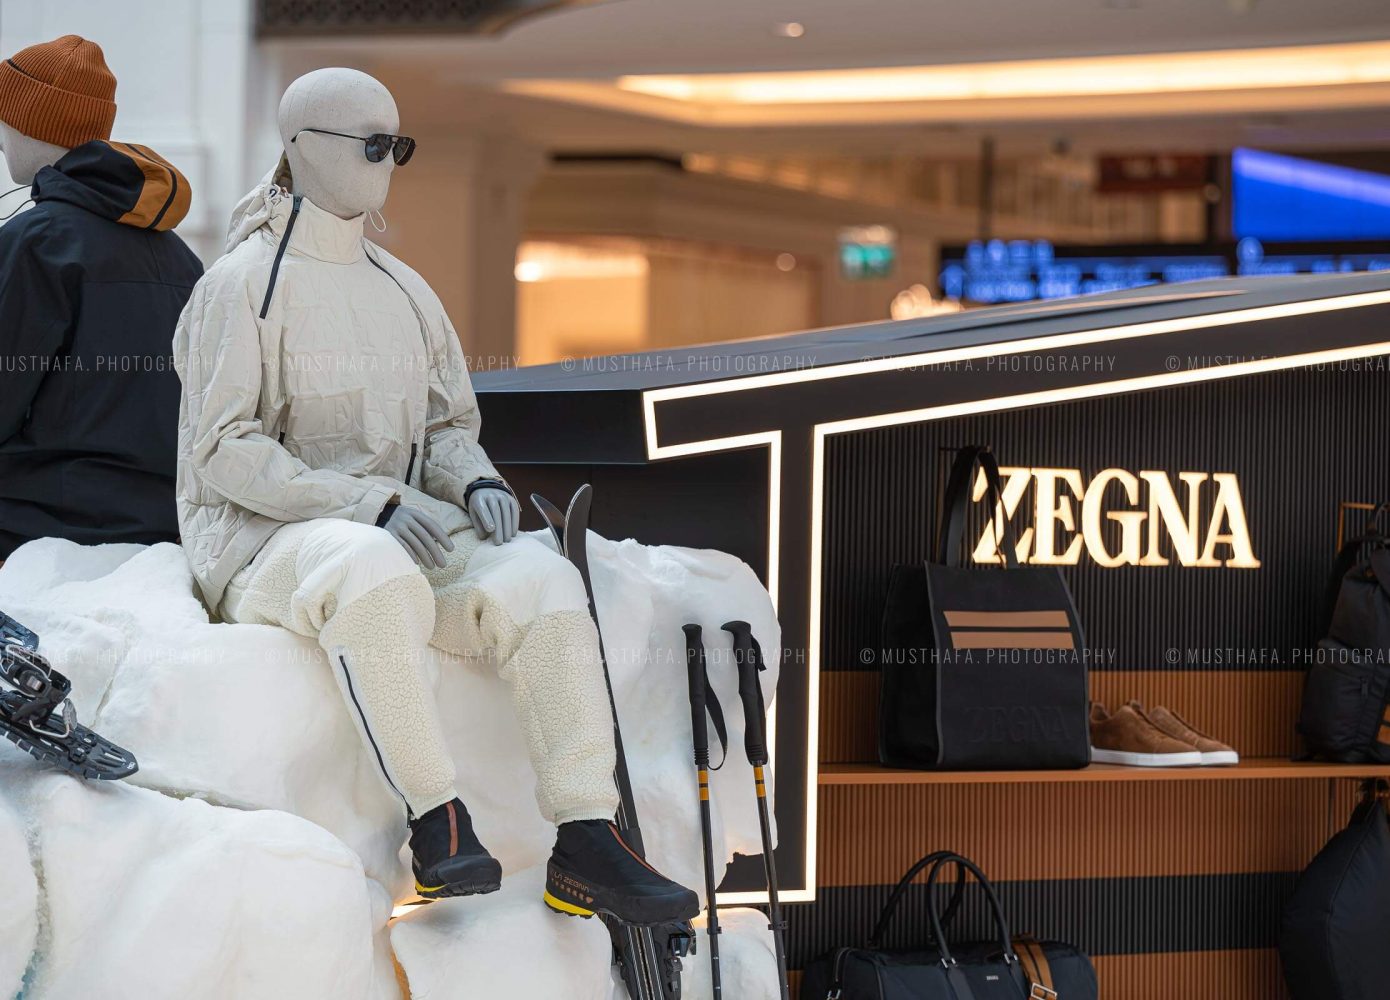 Zegna pop up boutique Dubai Mall MOE Mall Of Emirates photography interior architecture Dubai Abu Dhabi UAE Qatar Doha Kuwait Oman Saudi Arabia KSA Riyadh Bahrain 01